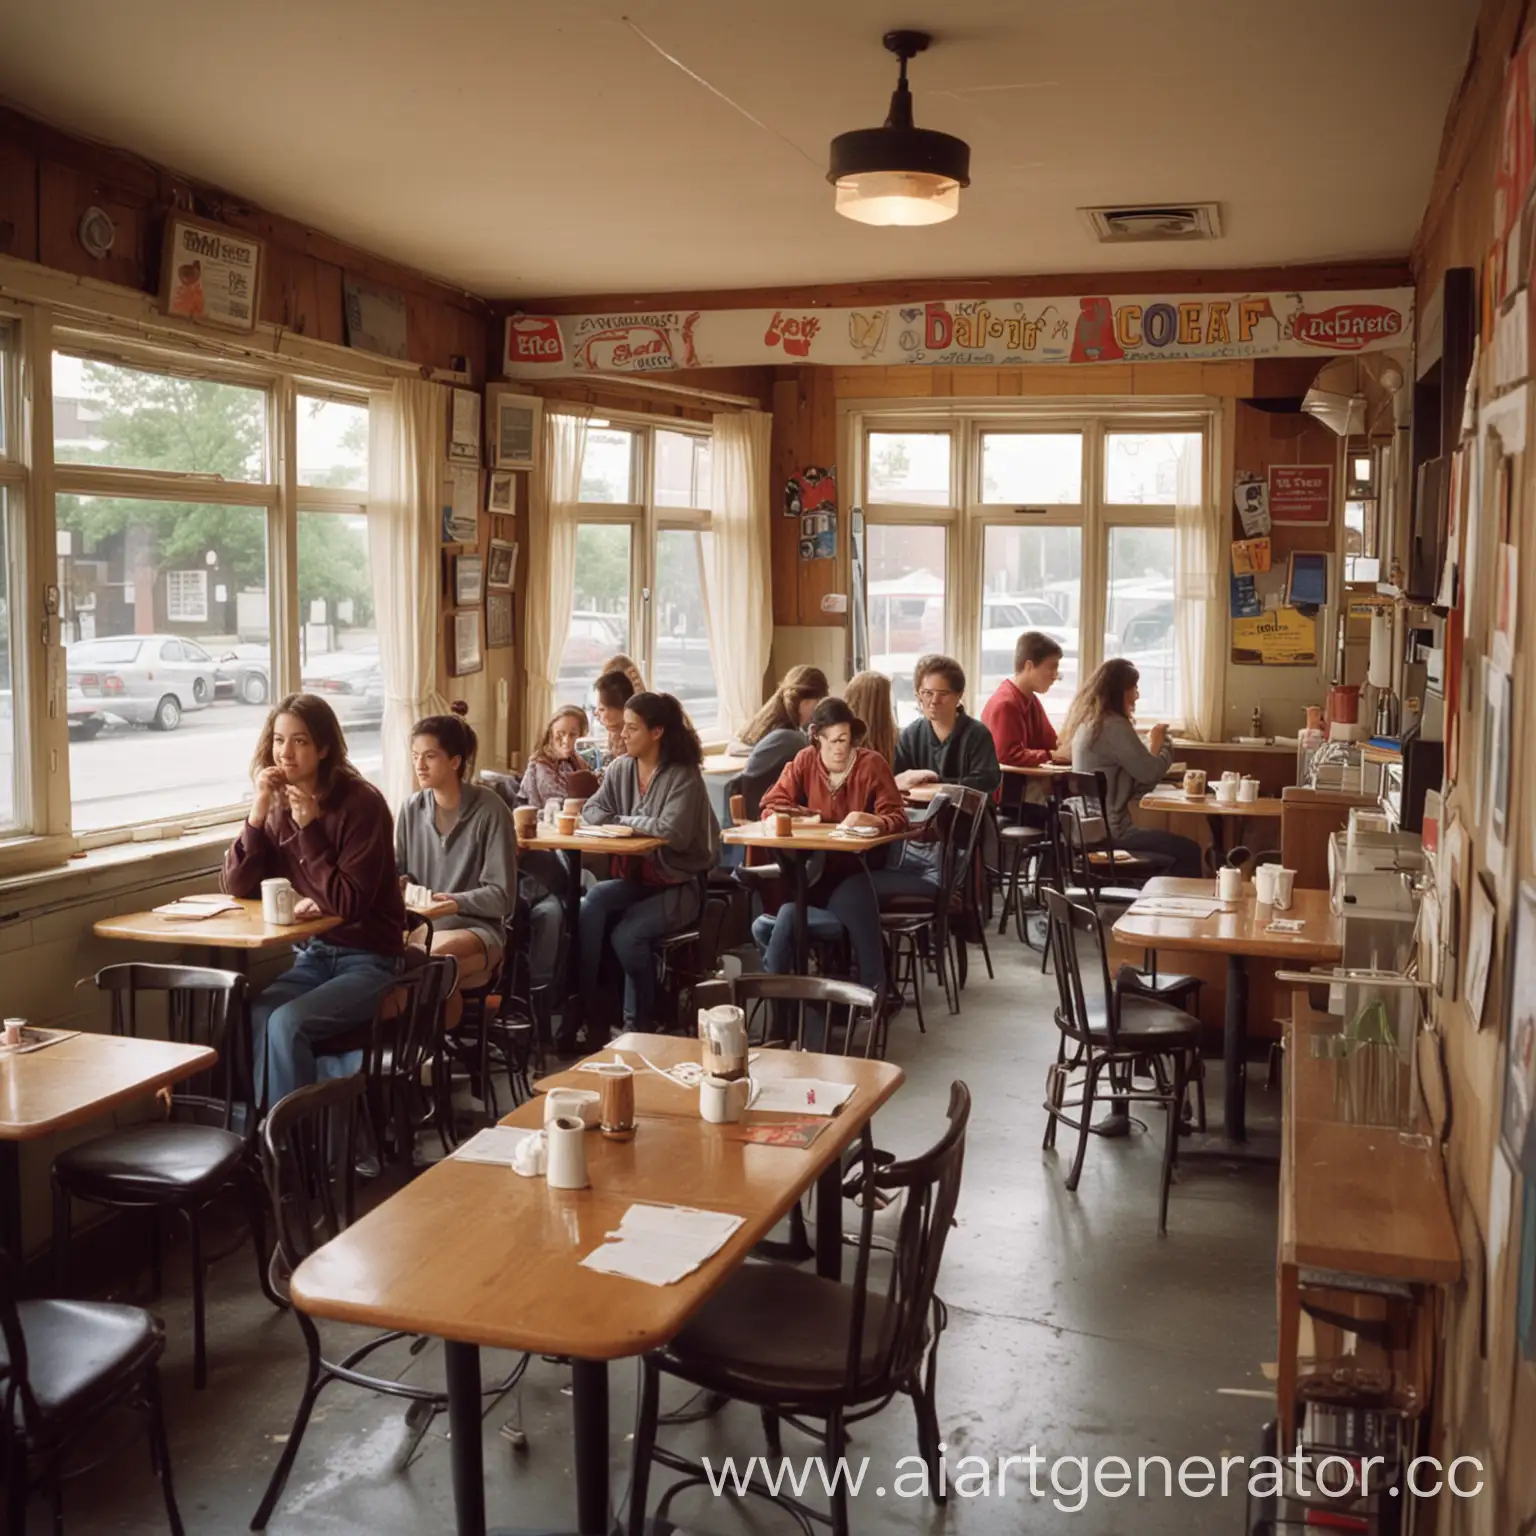 Vintage-American-Cafe-Scene-Students-Gathering-in-a-1990s-Diner